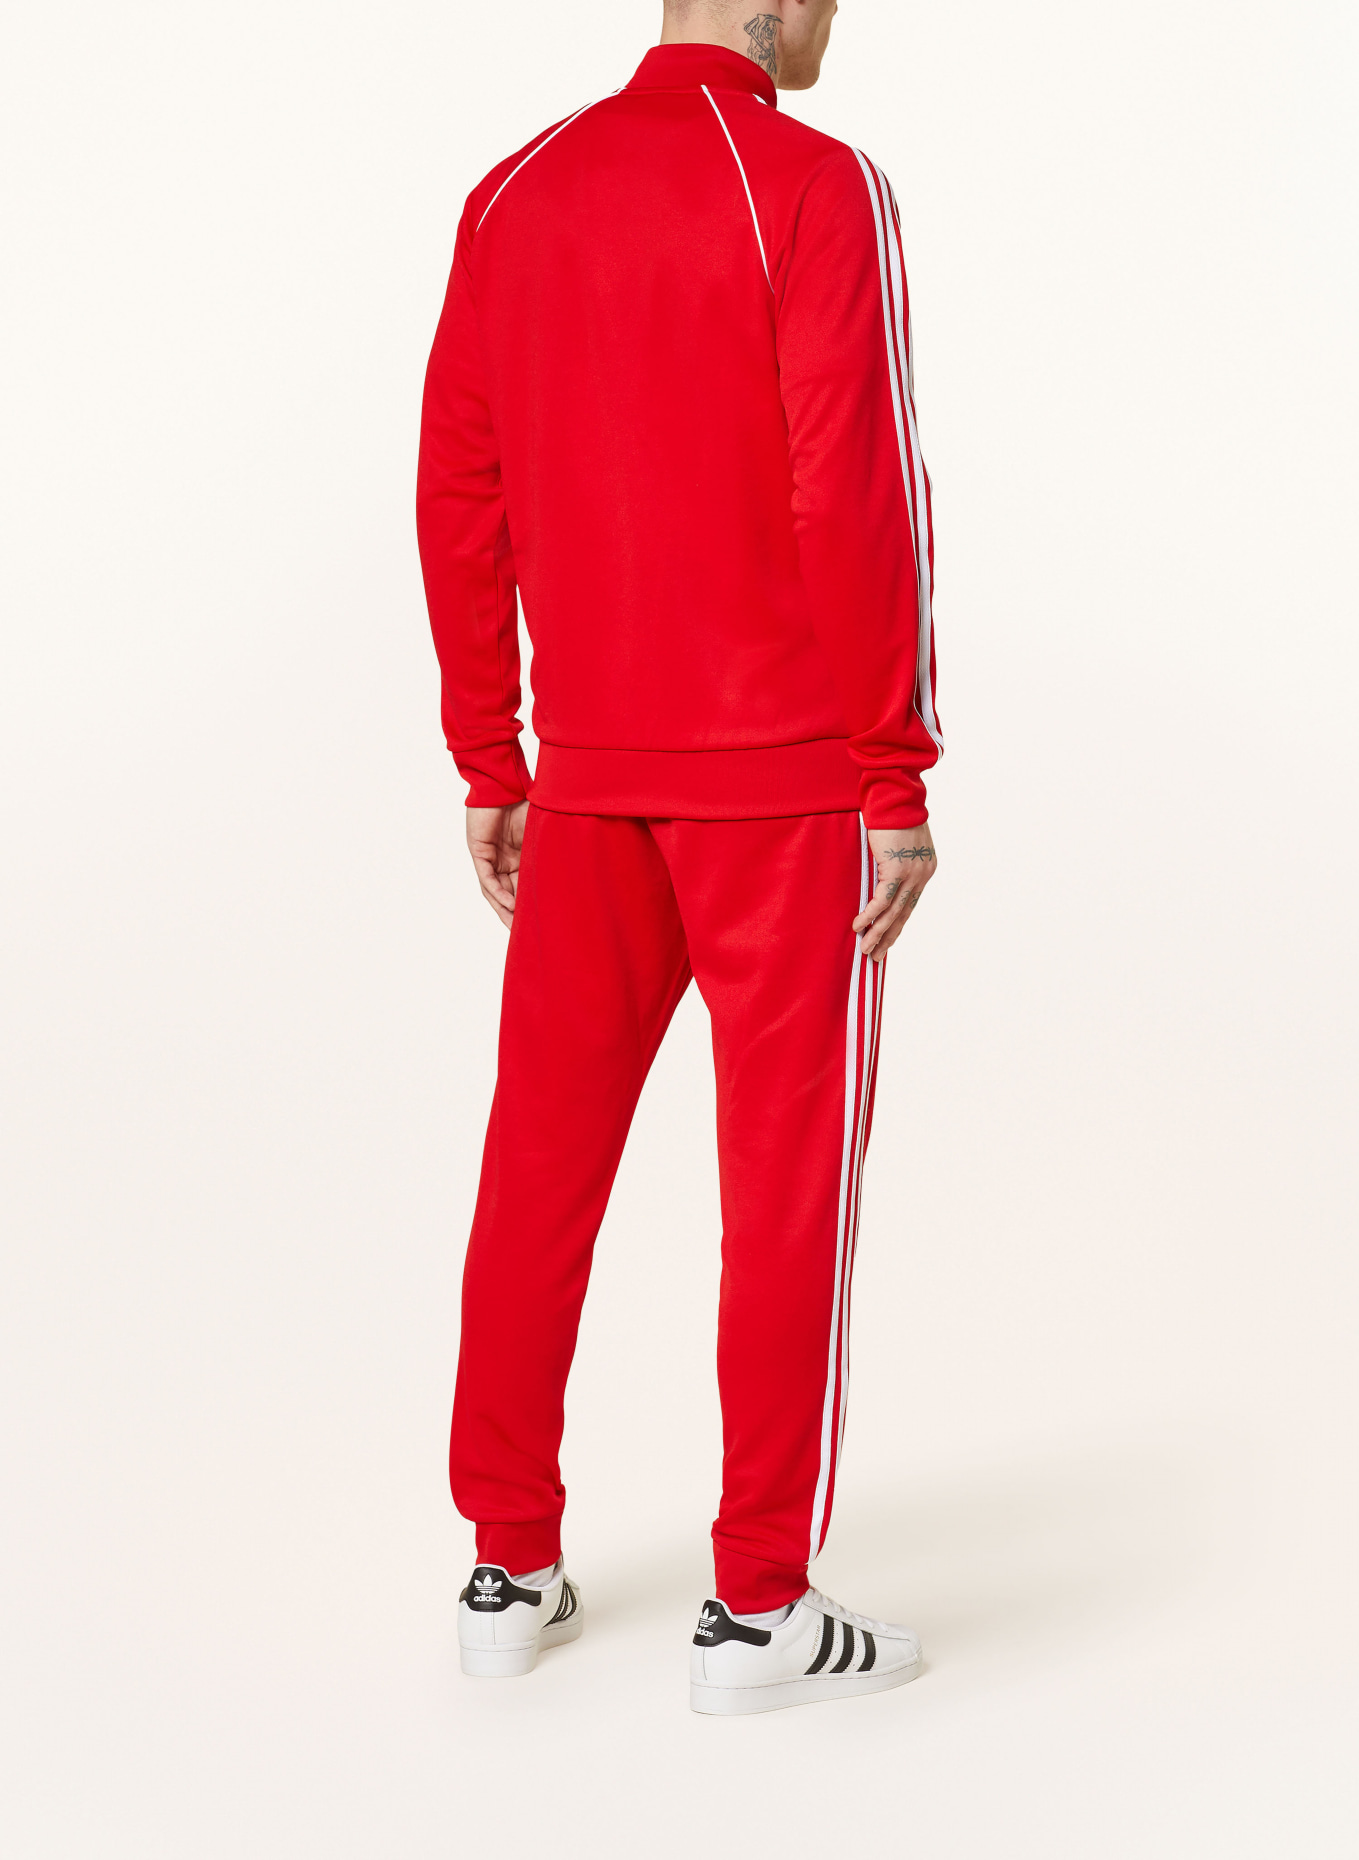 adidas Originals 3D Trefoil 3 Stripes Track Pants Red NWT Size M Mens  GE6249 | eBay